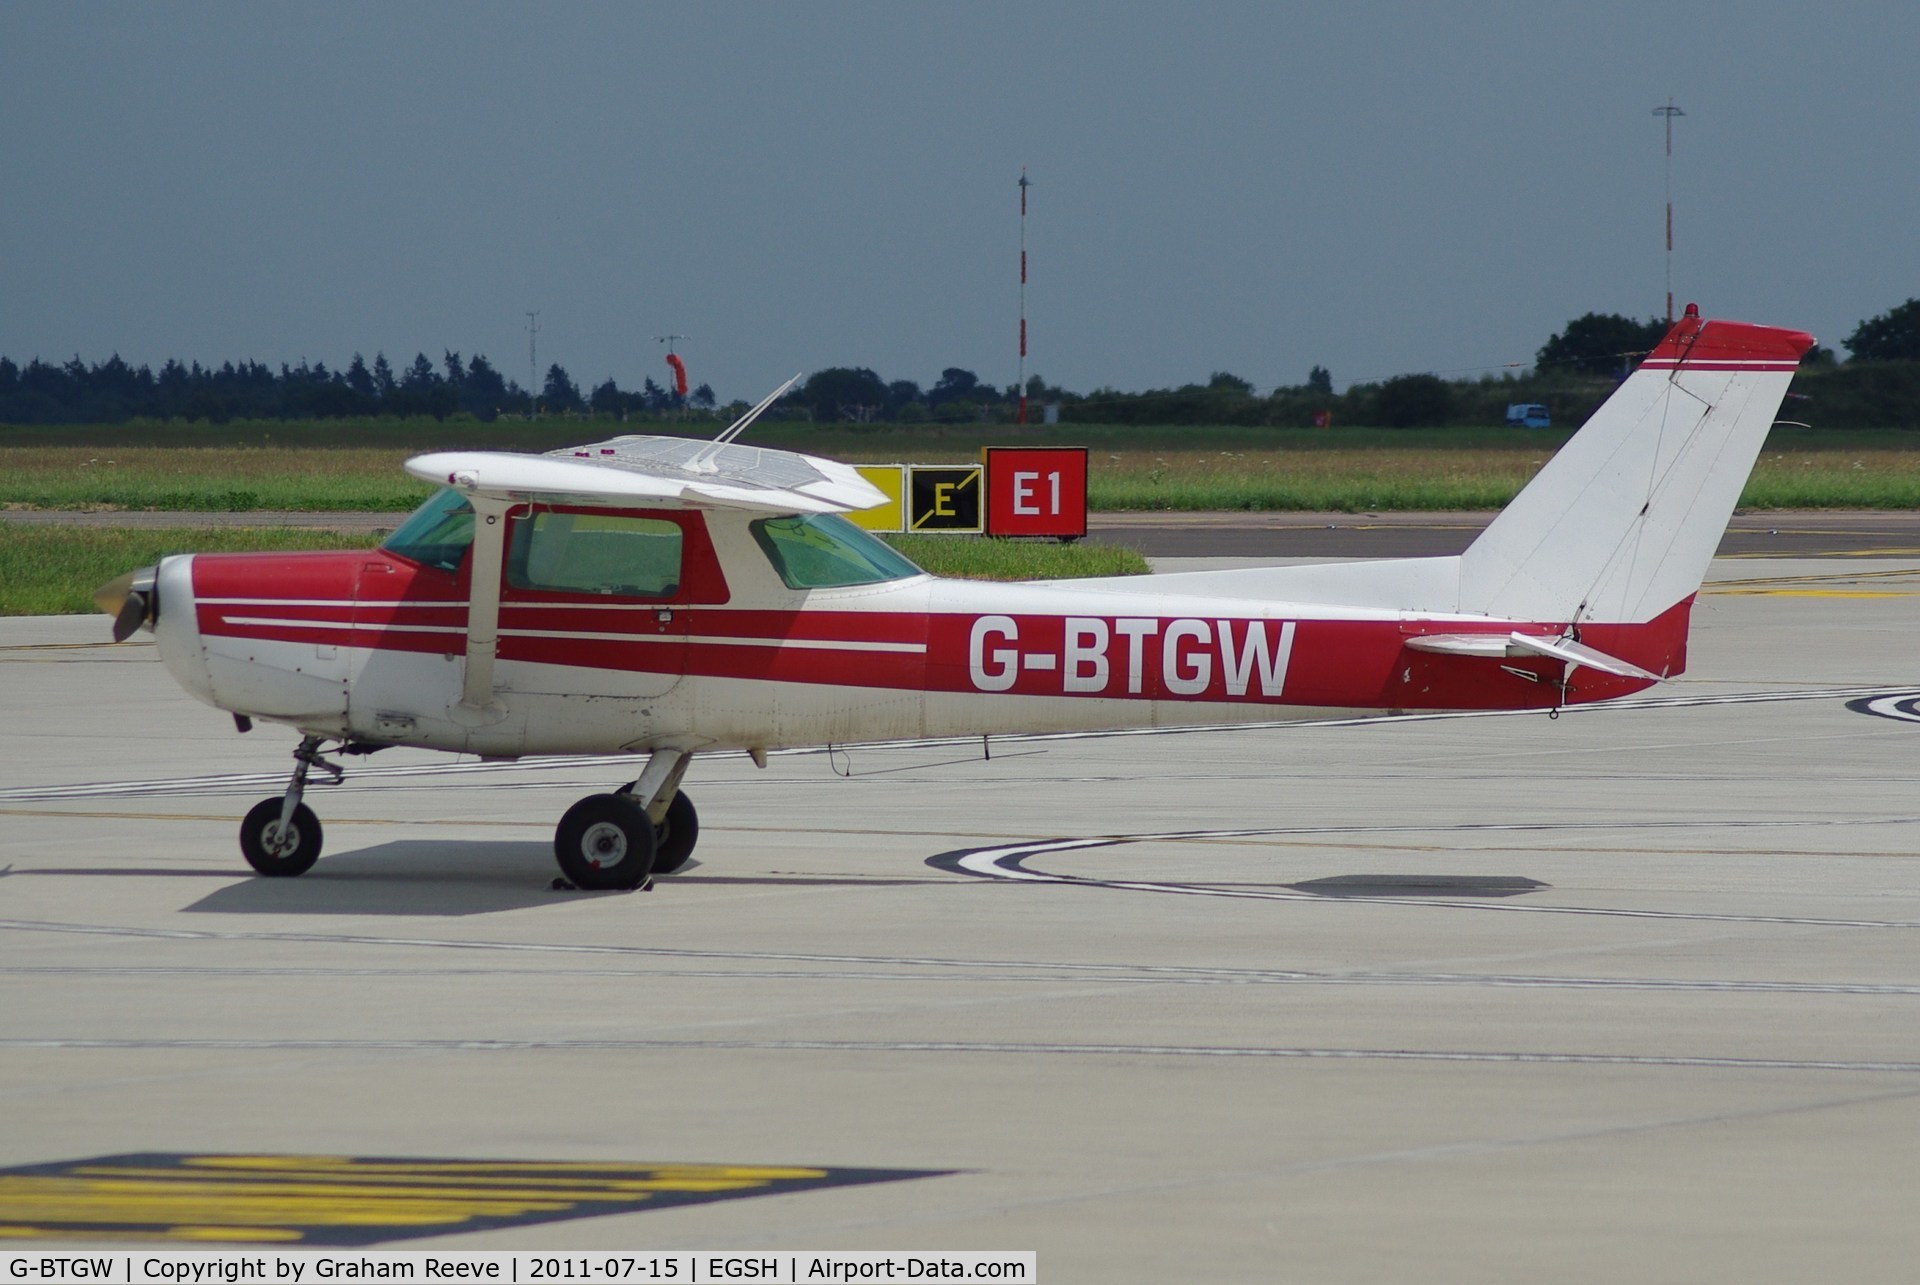 G-BTGW, 1979 Cessna 152 C/N 15279812, Parked at Norwich.